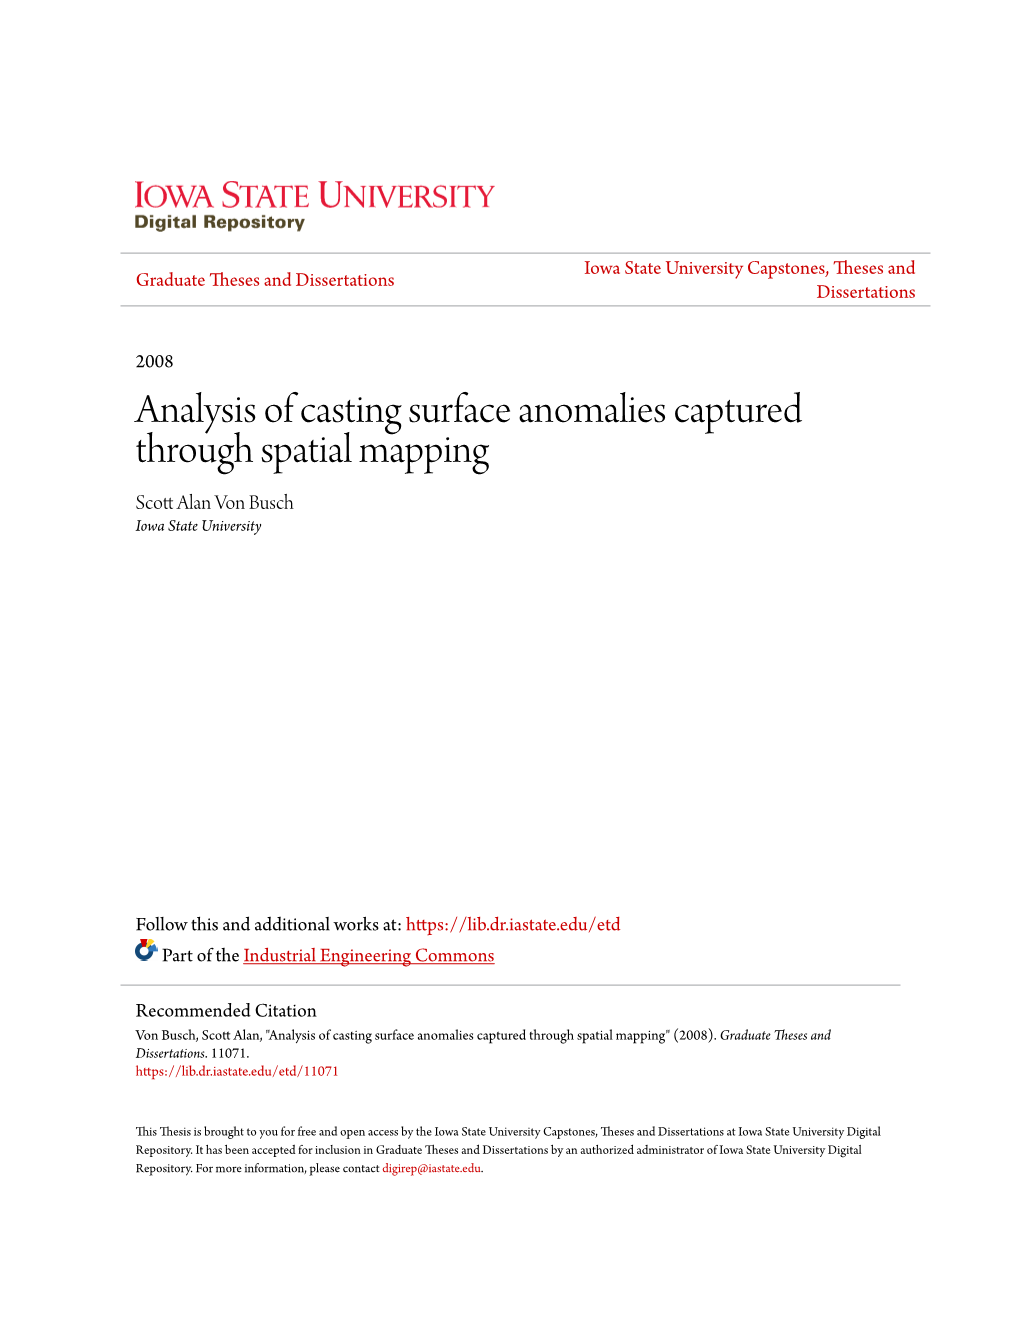 Analysis of Casting Surface Anomalies Captured Through Spatial Mapping Scott Alan Von Busch Iowa State University